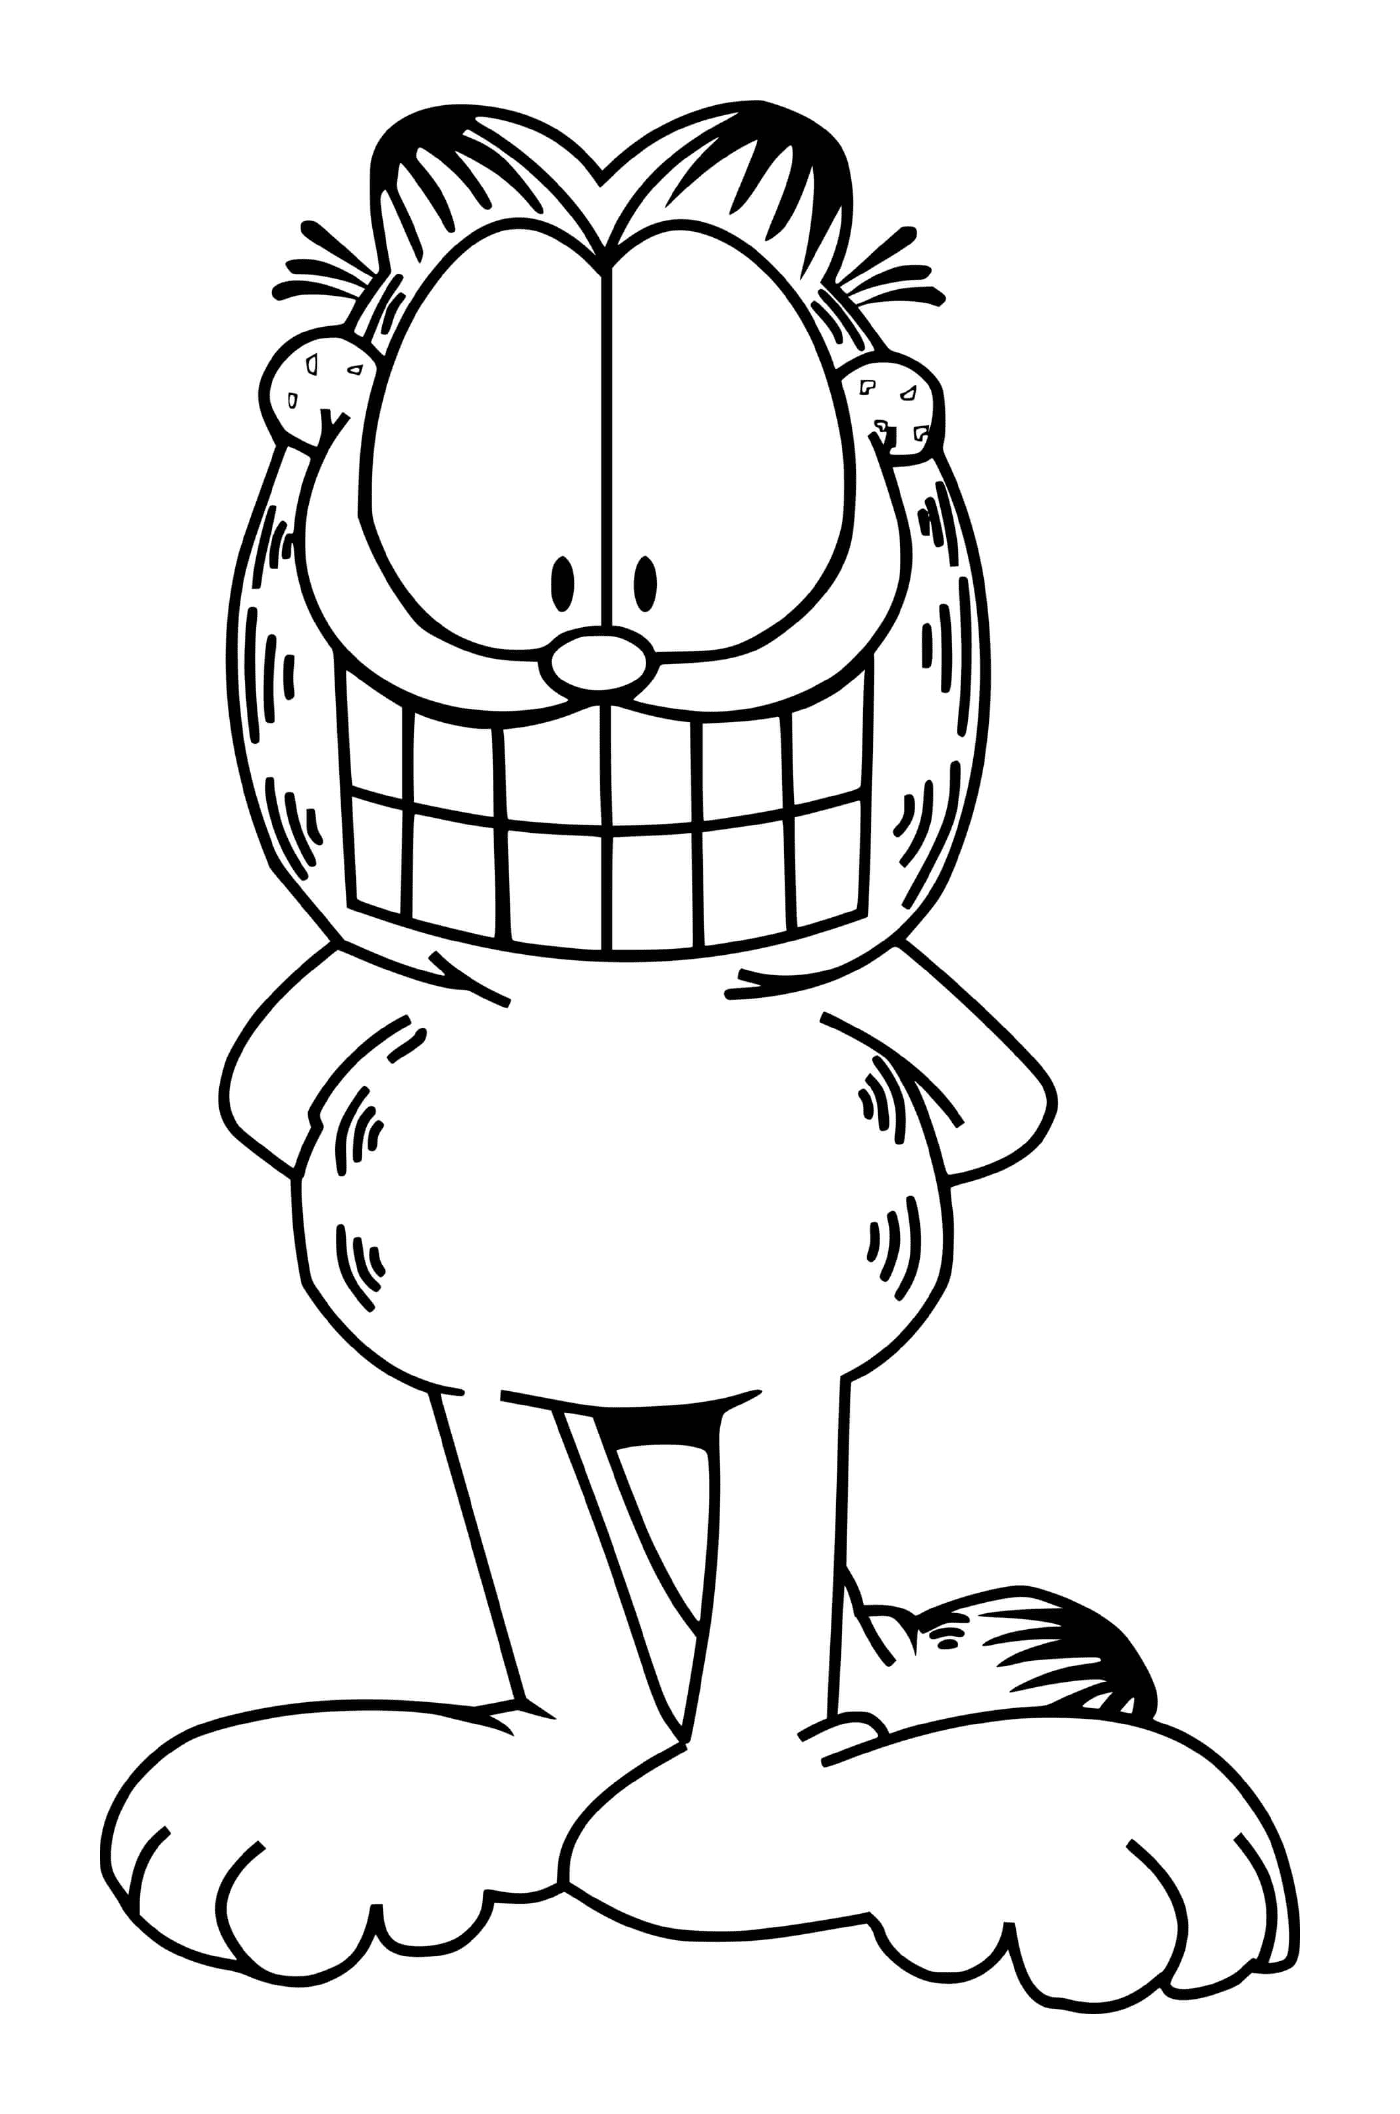  Garfield shows a big smile 